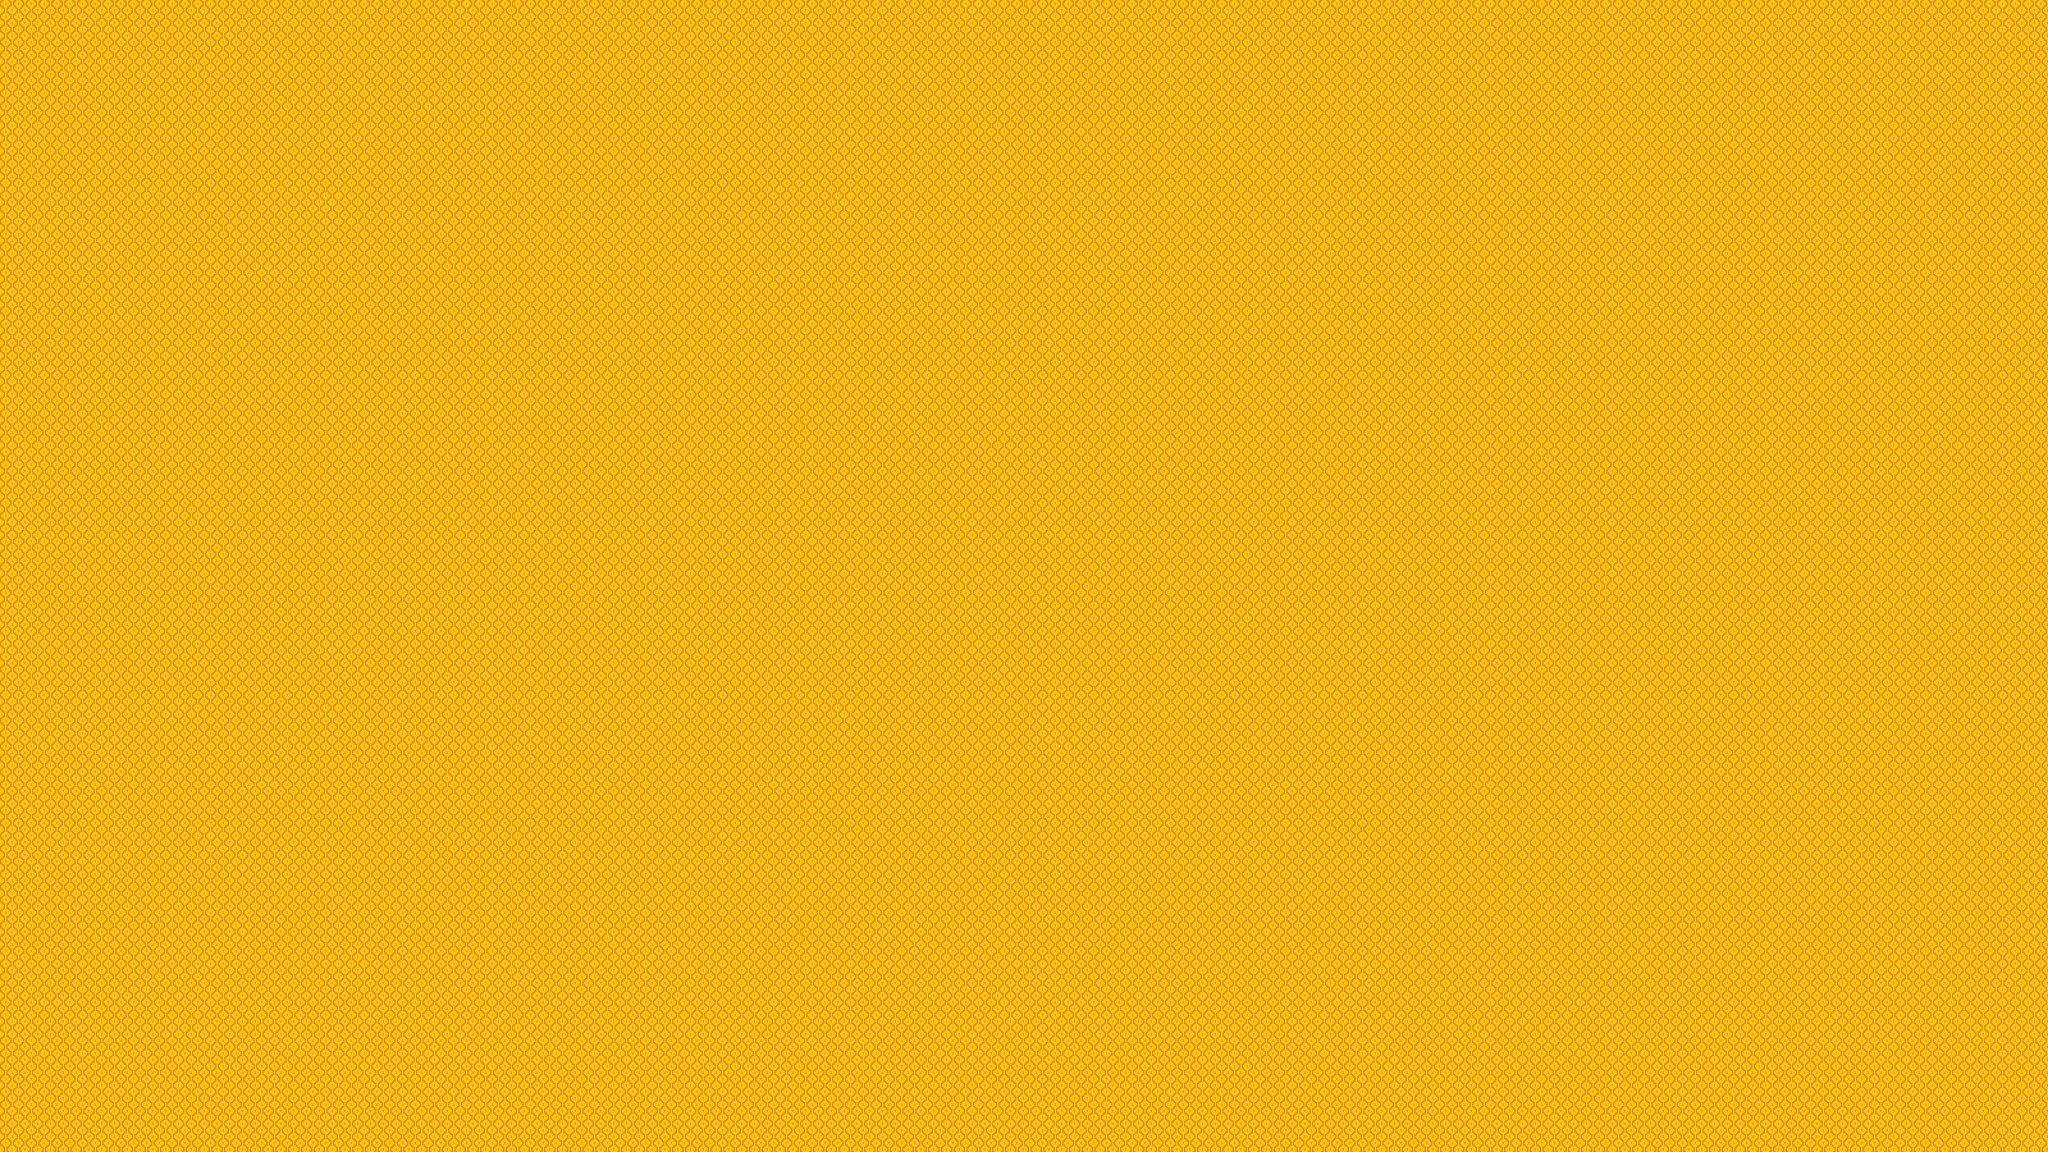 yellow wallpaper full HDx1152 kB by Seldon Black. All